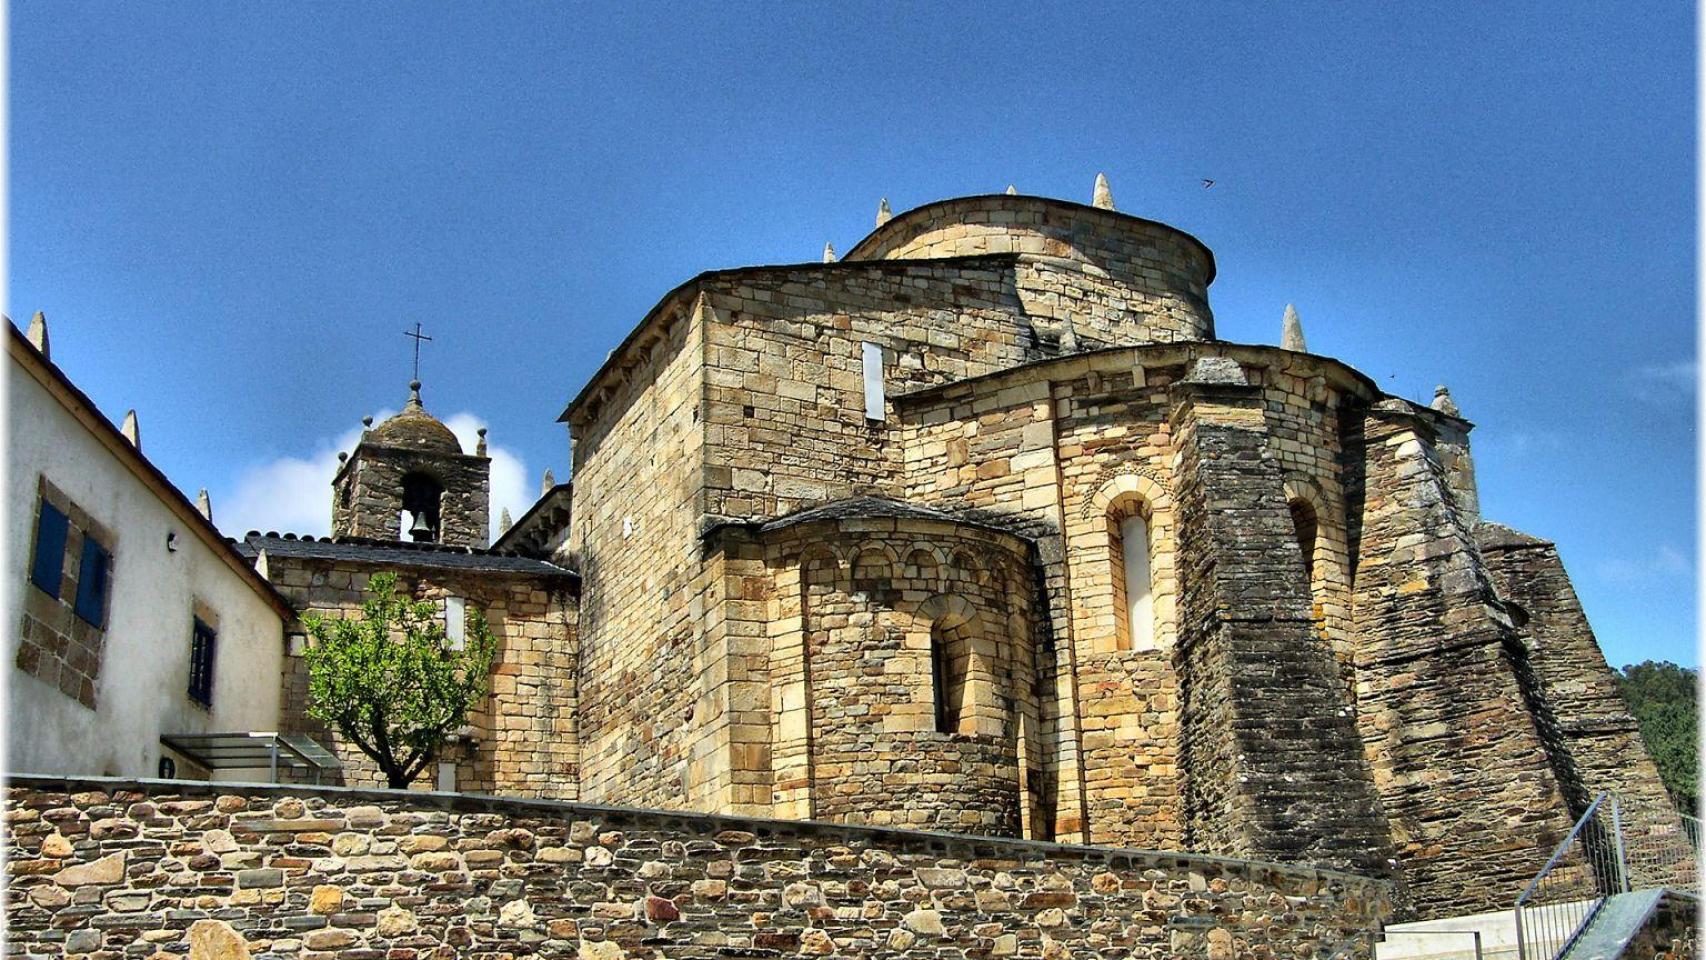 La catedral más antigua de España está en Galicia: San Martiño de Mondoñedo